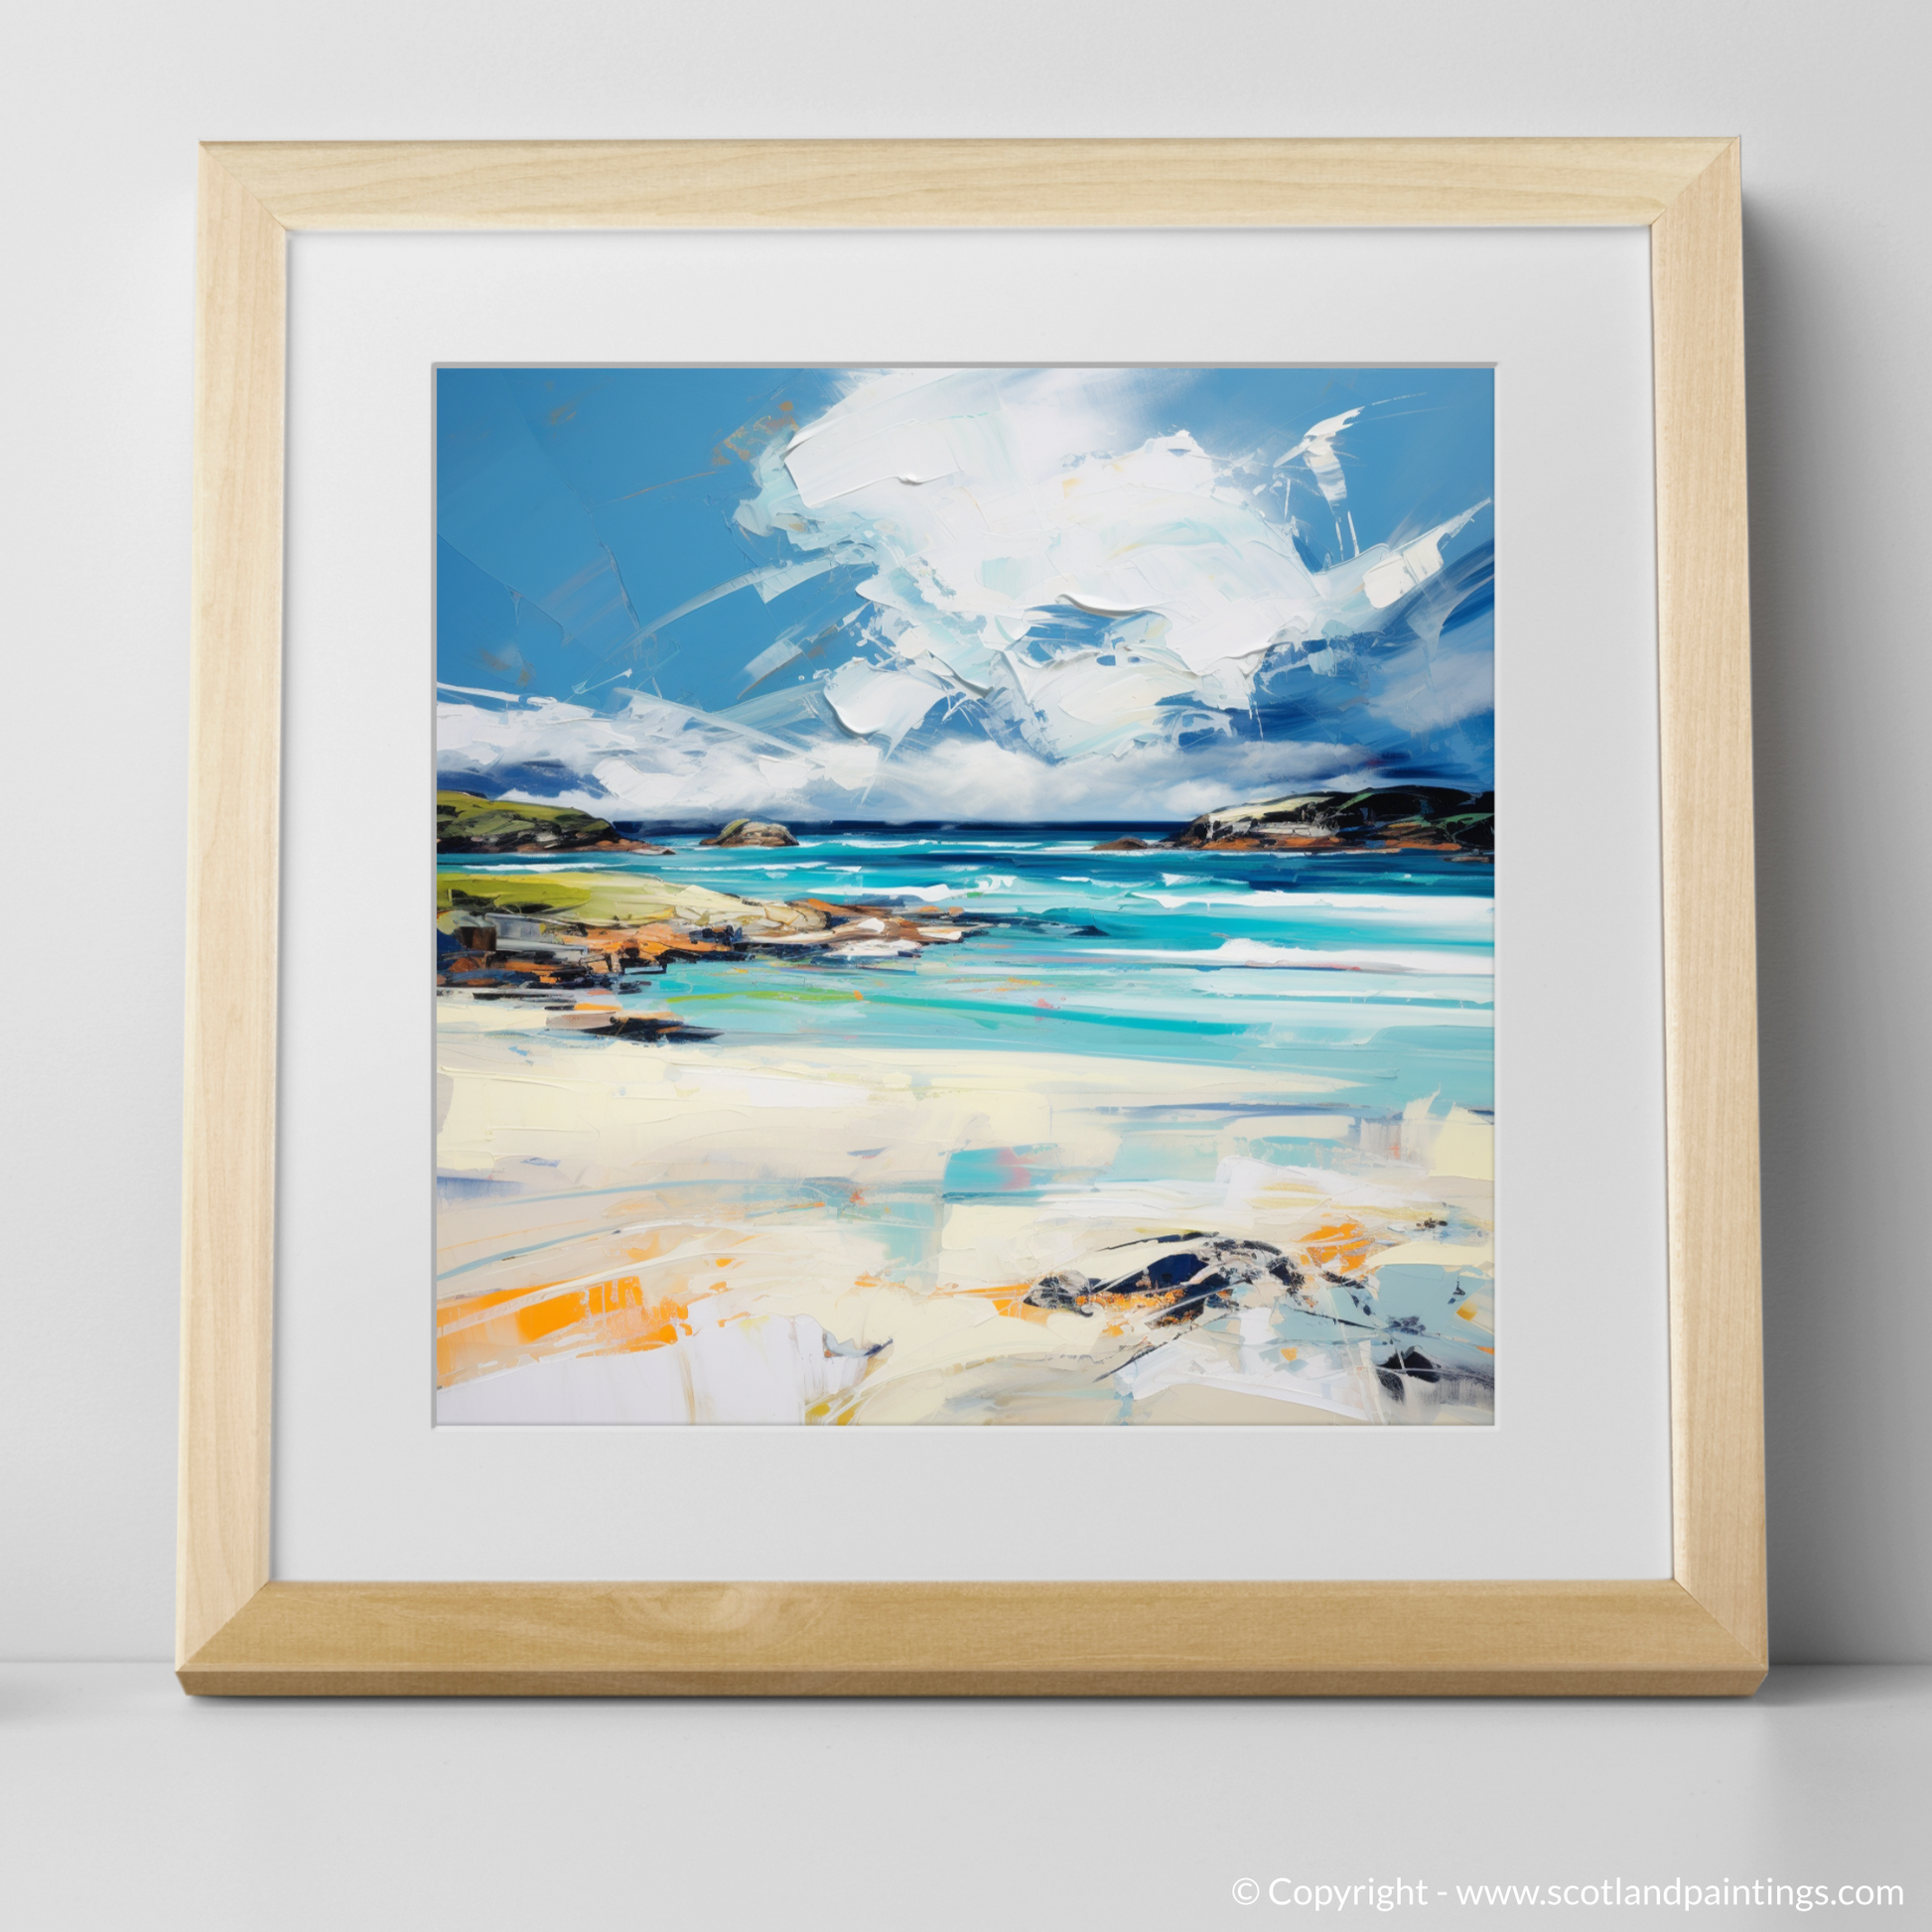 Art Print of Camusdarach Beach with a natural frame